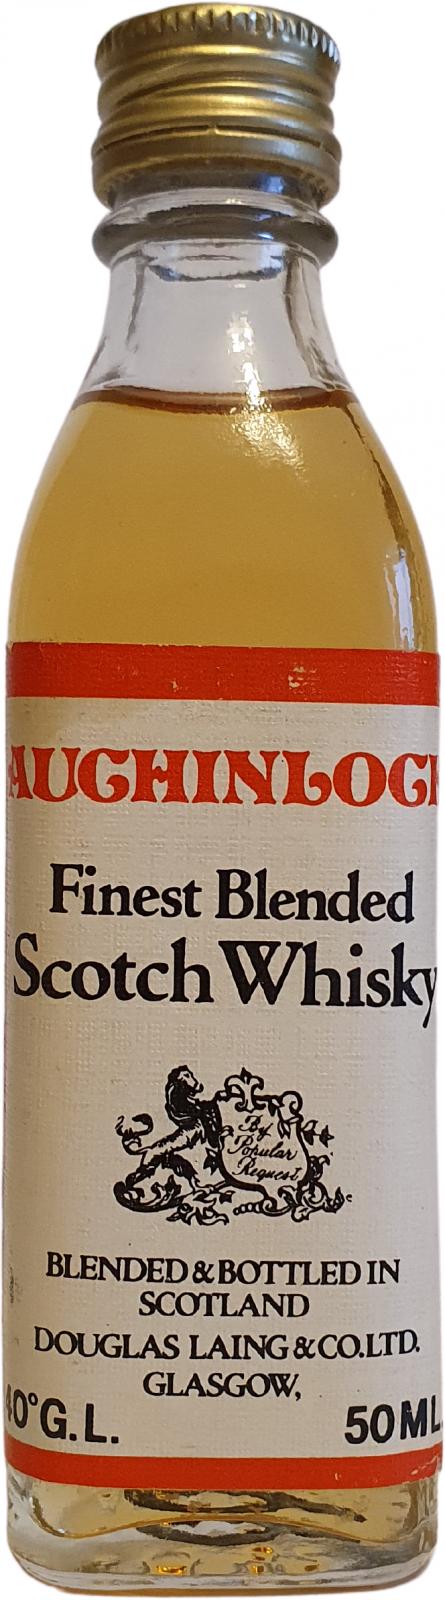 Auchinloch Finest Blended Scotch Whisky